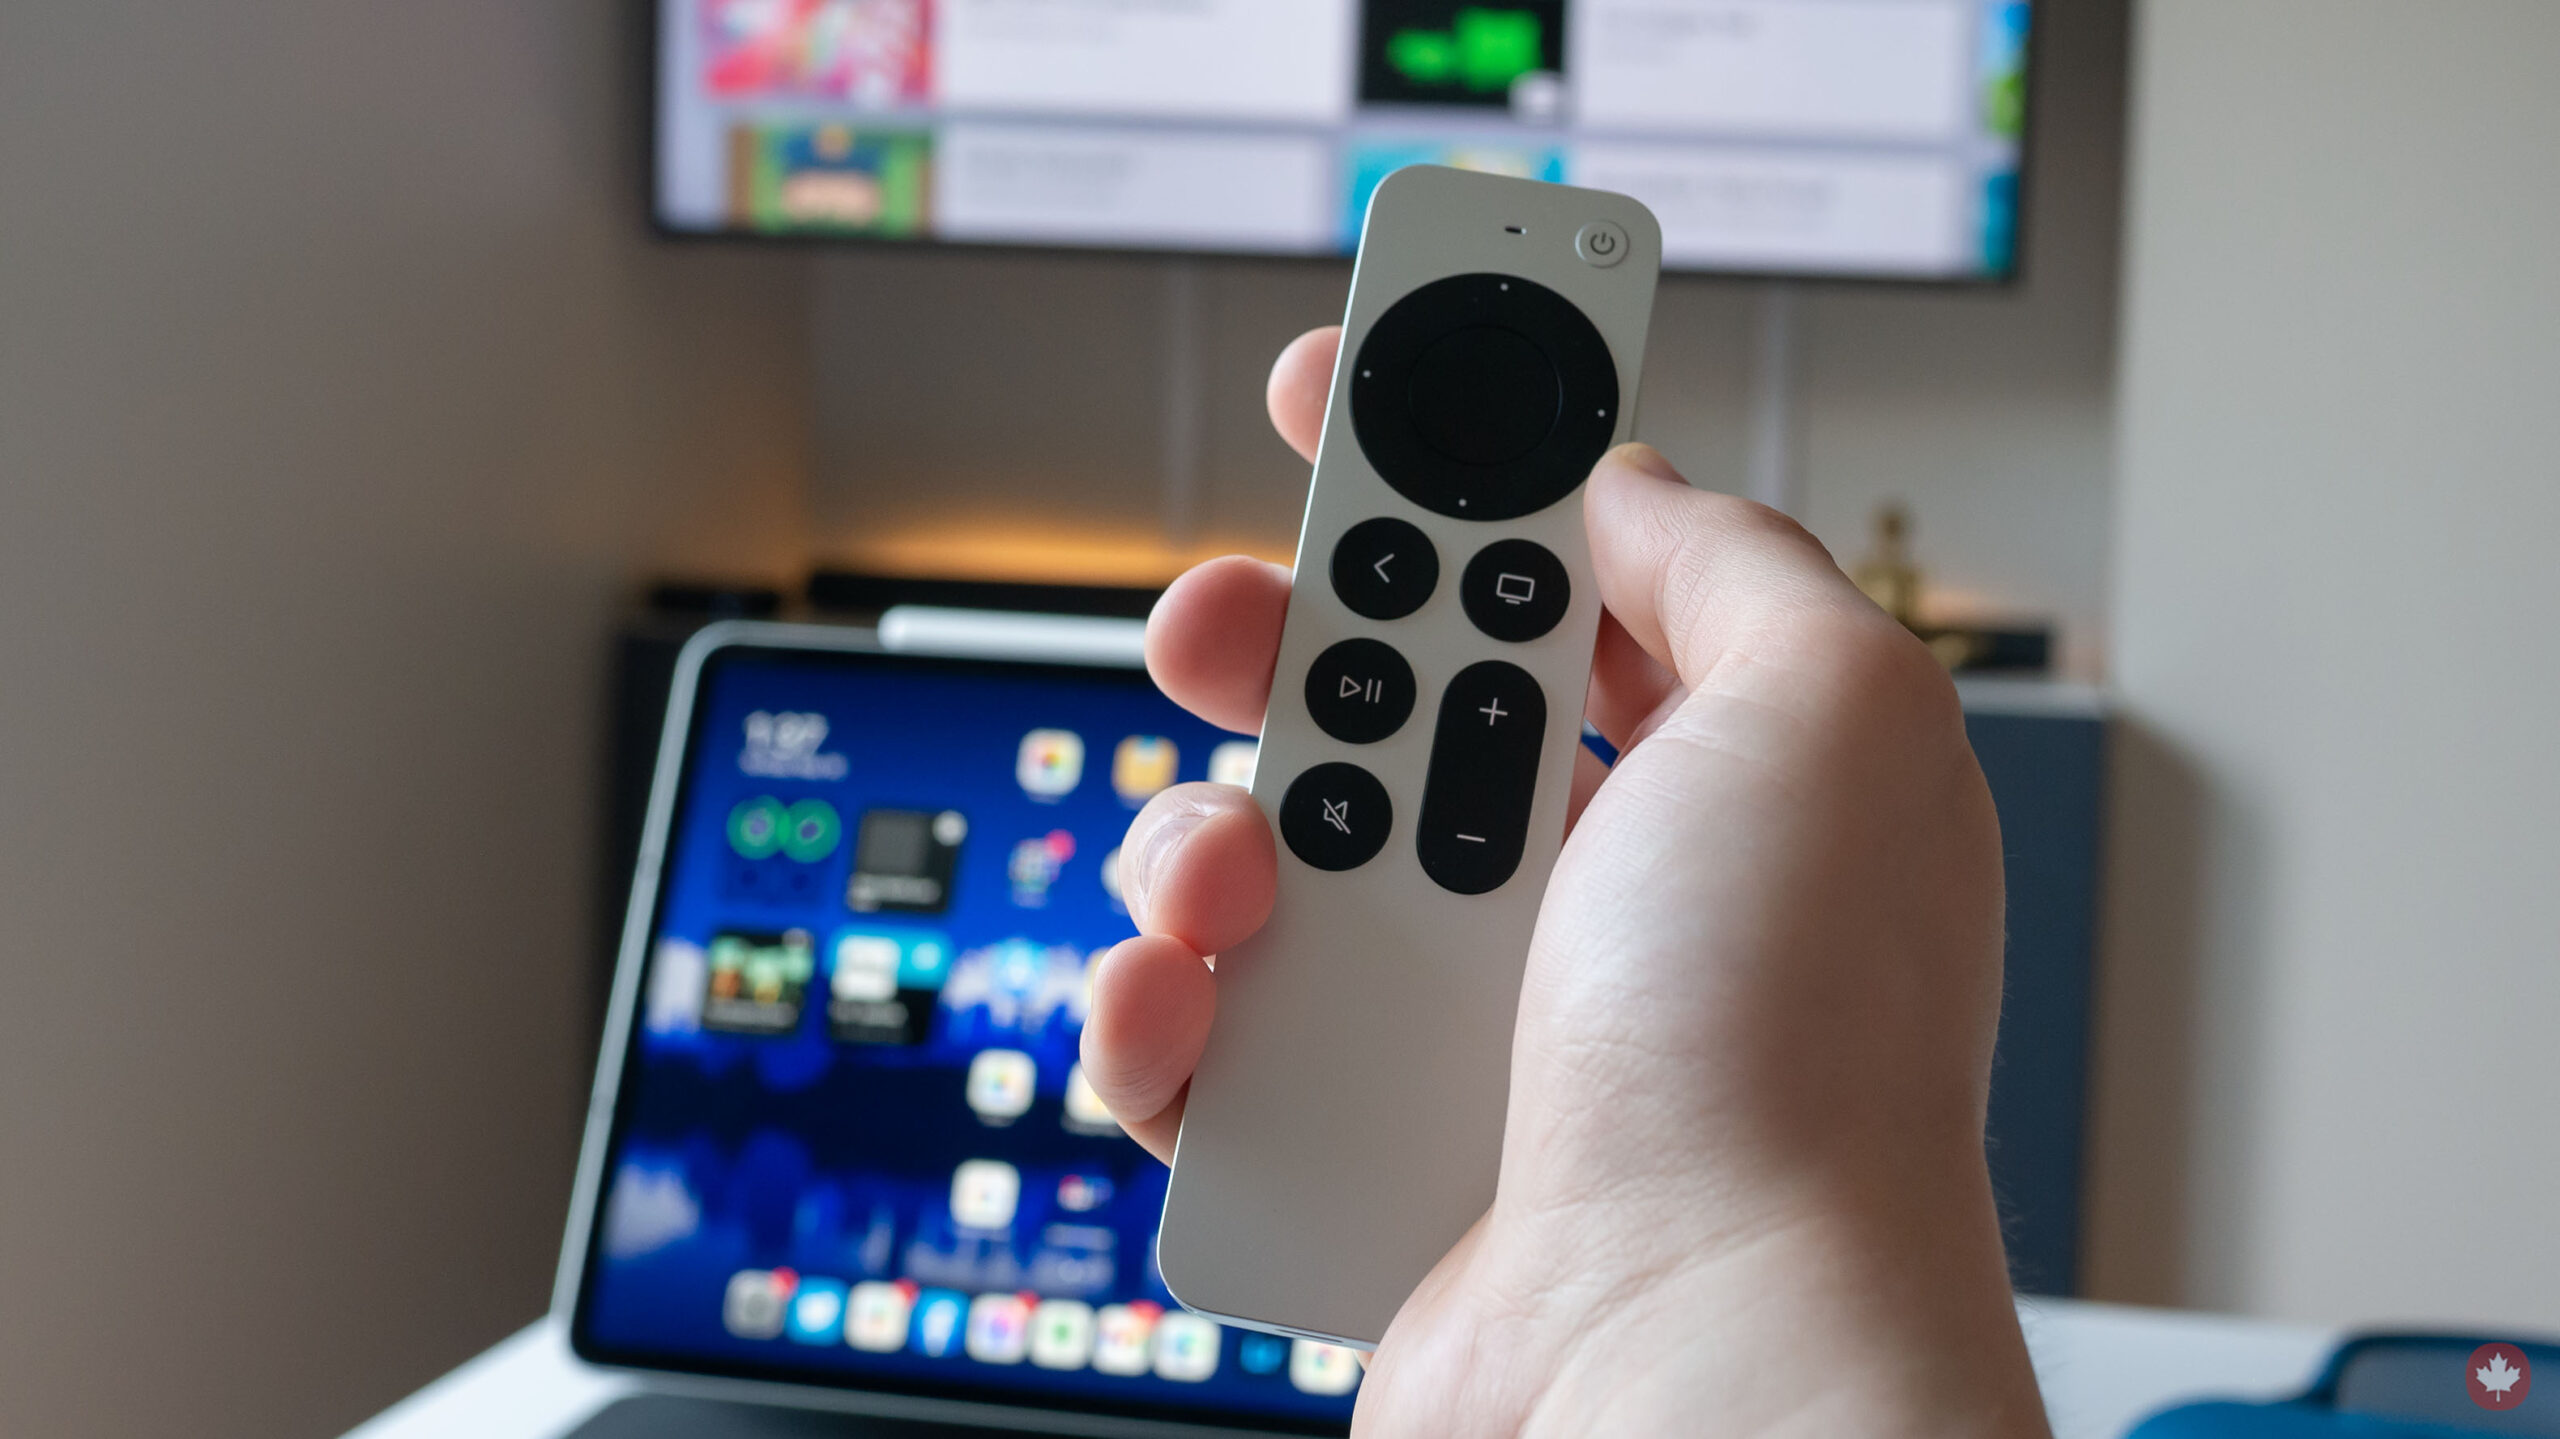 Apple TV 4K (2021) remote